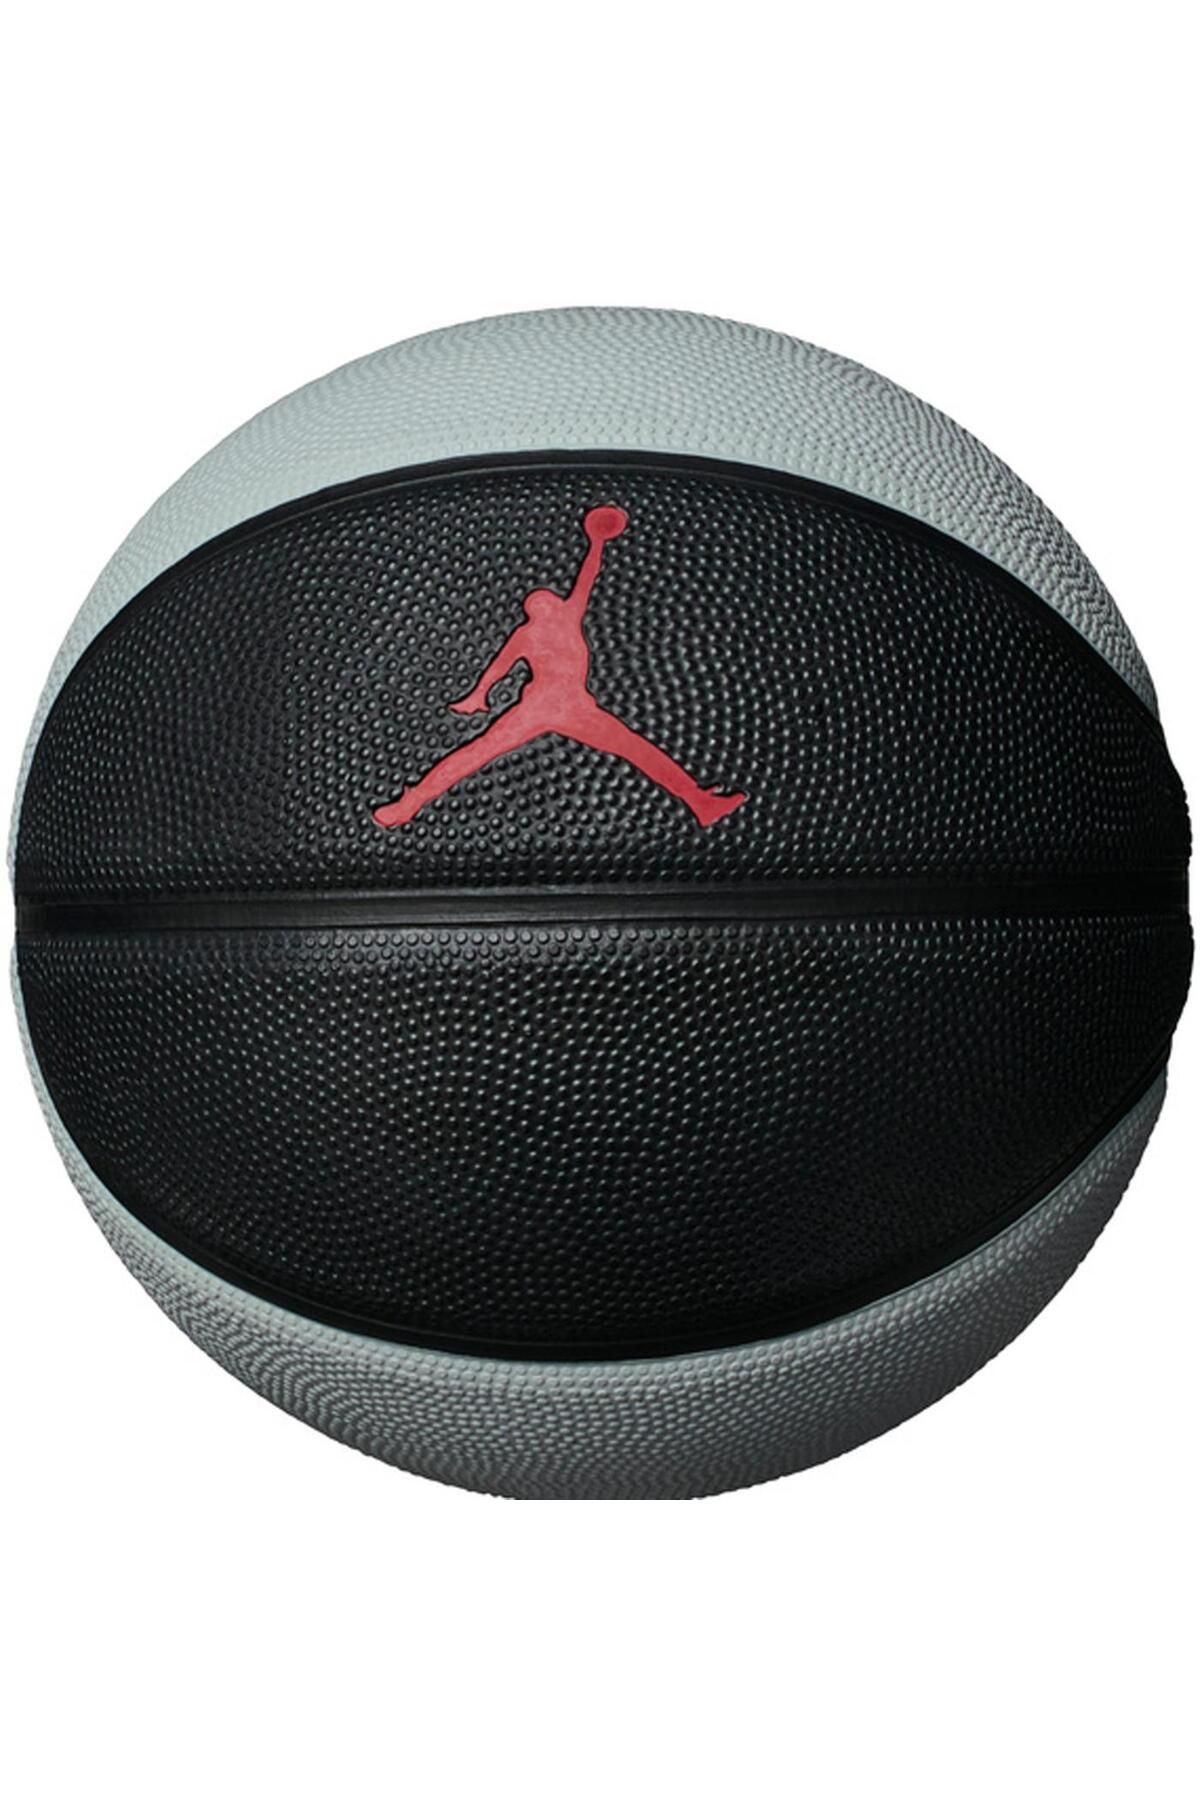 Nike JORDAN SKILLS Gri-Siyah Unisex Basketbol Topu